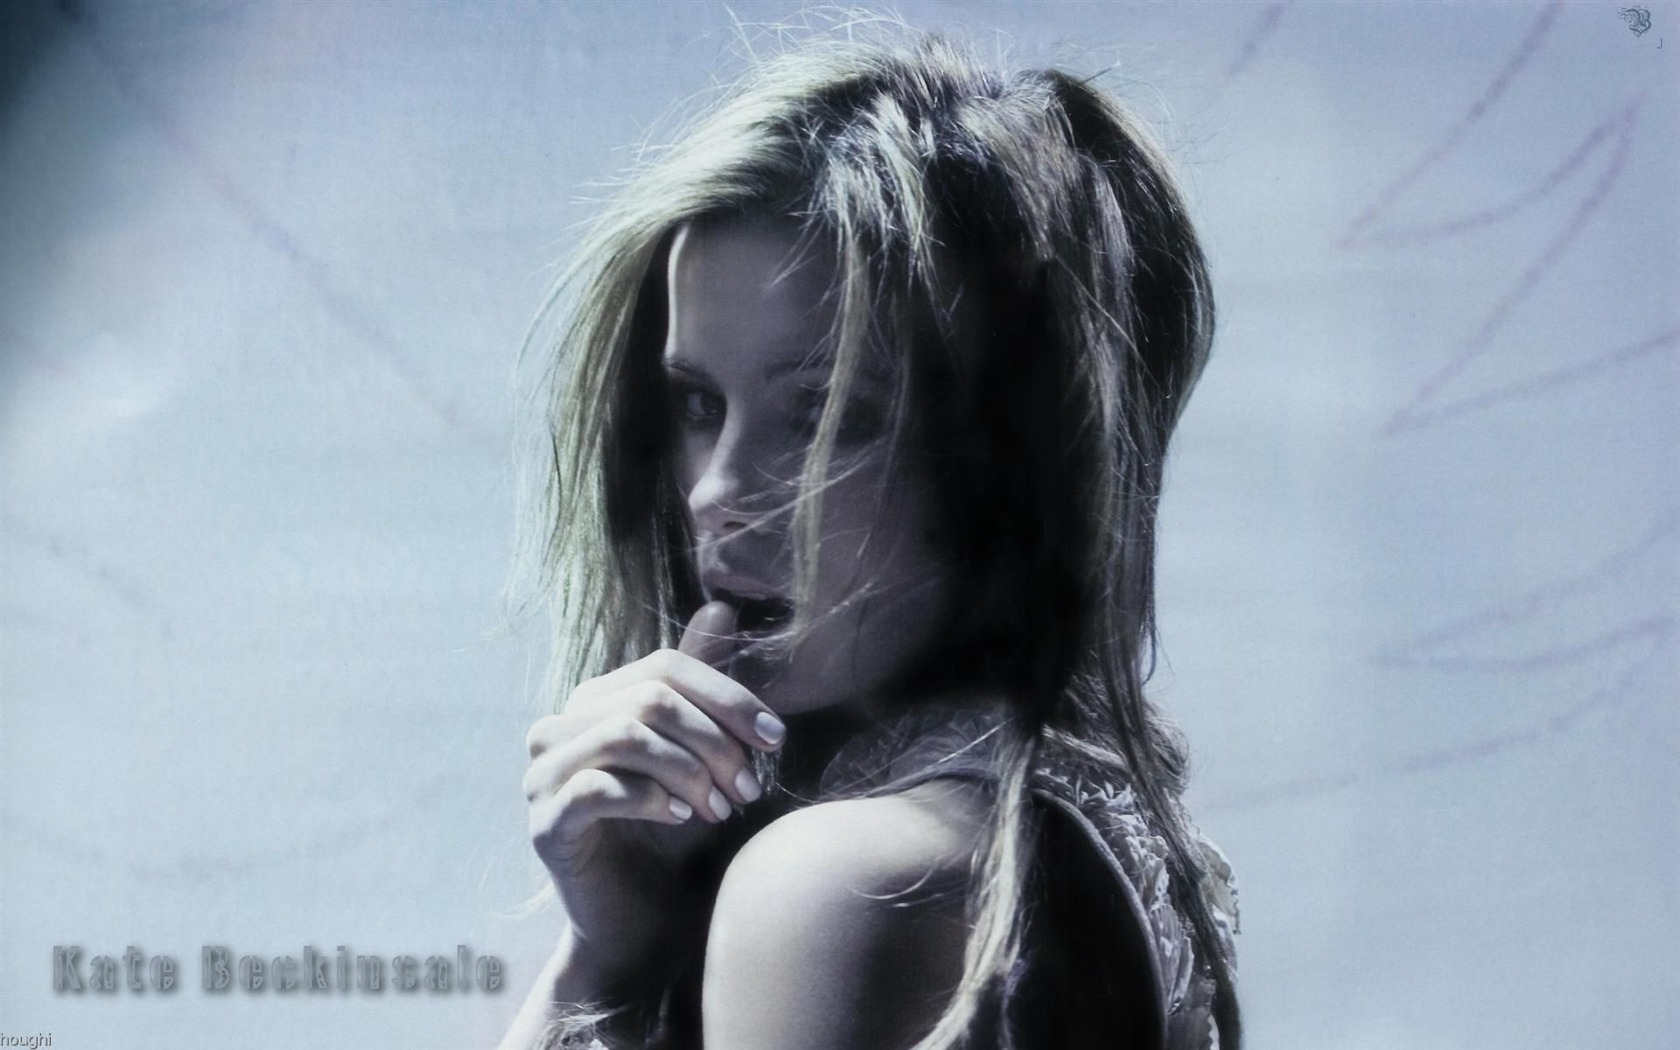 Kate Beckinsale 아름다운 벽지 #4 - 1680x1050